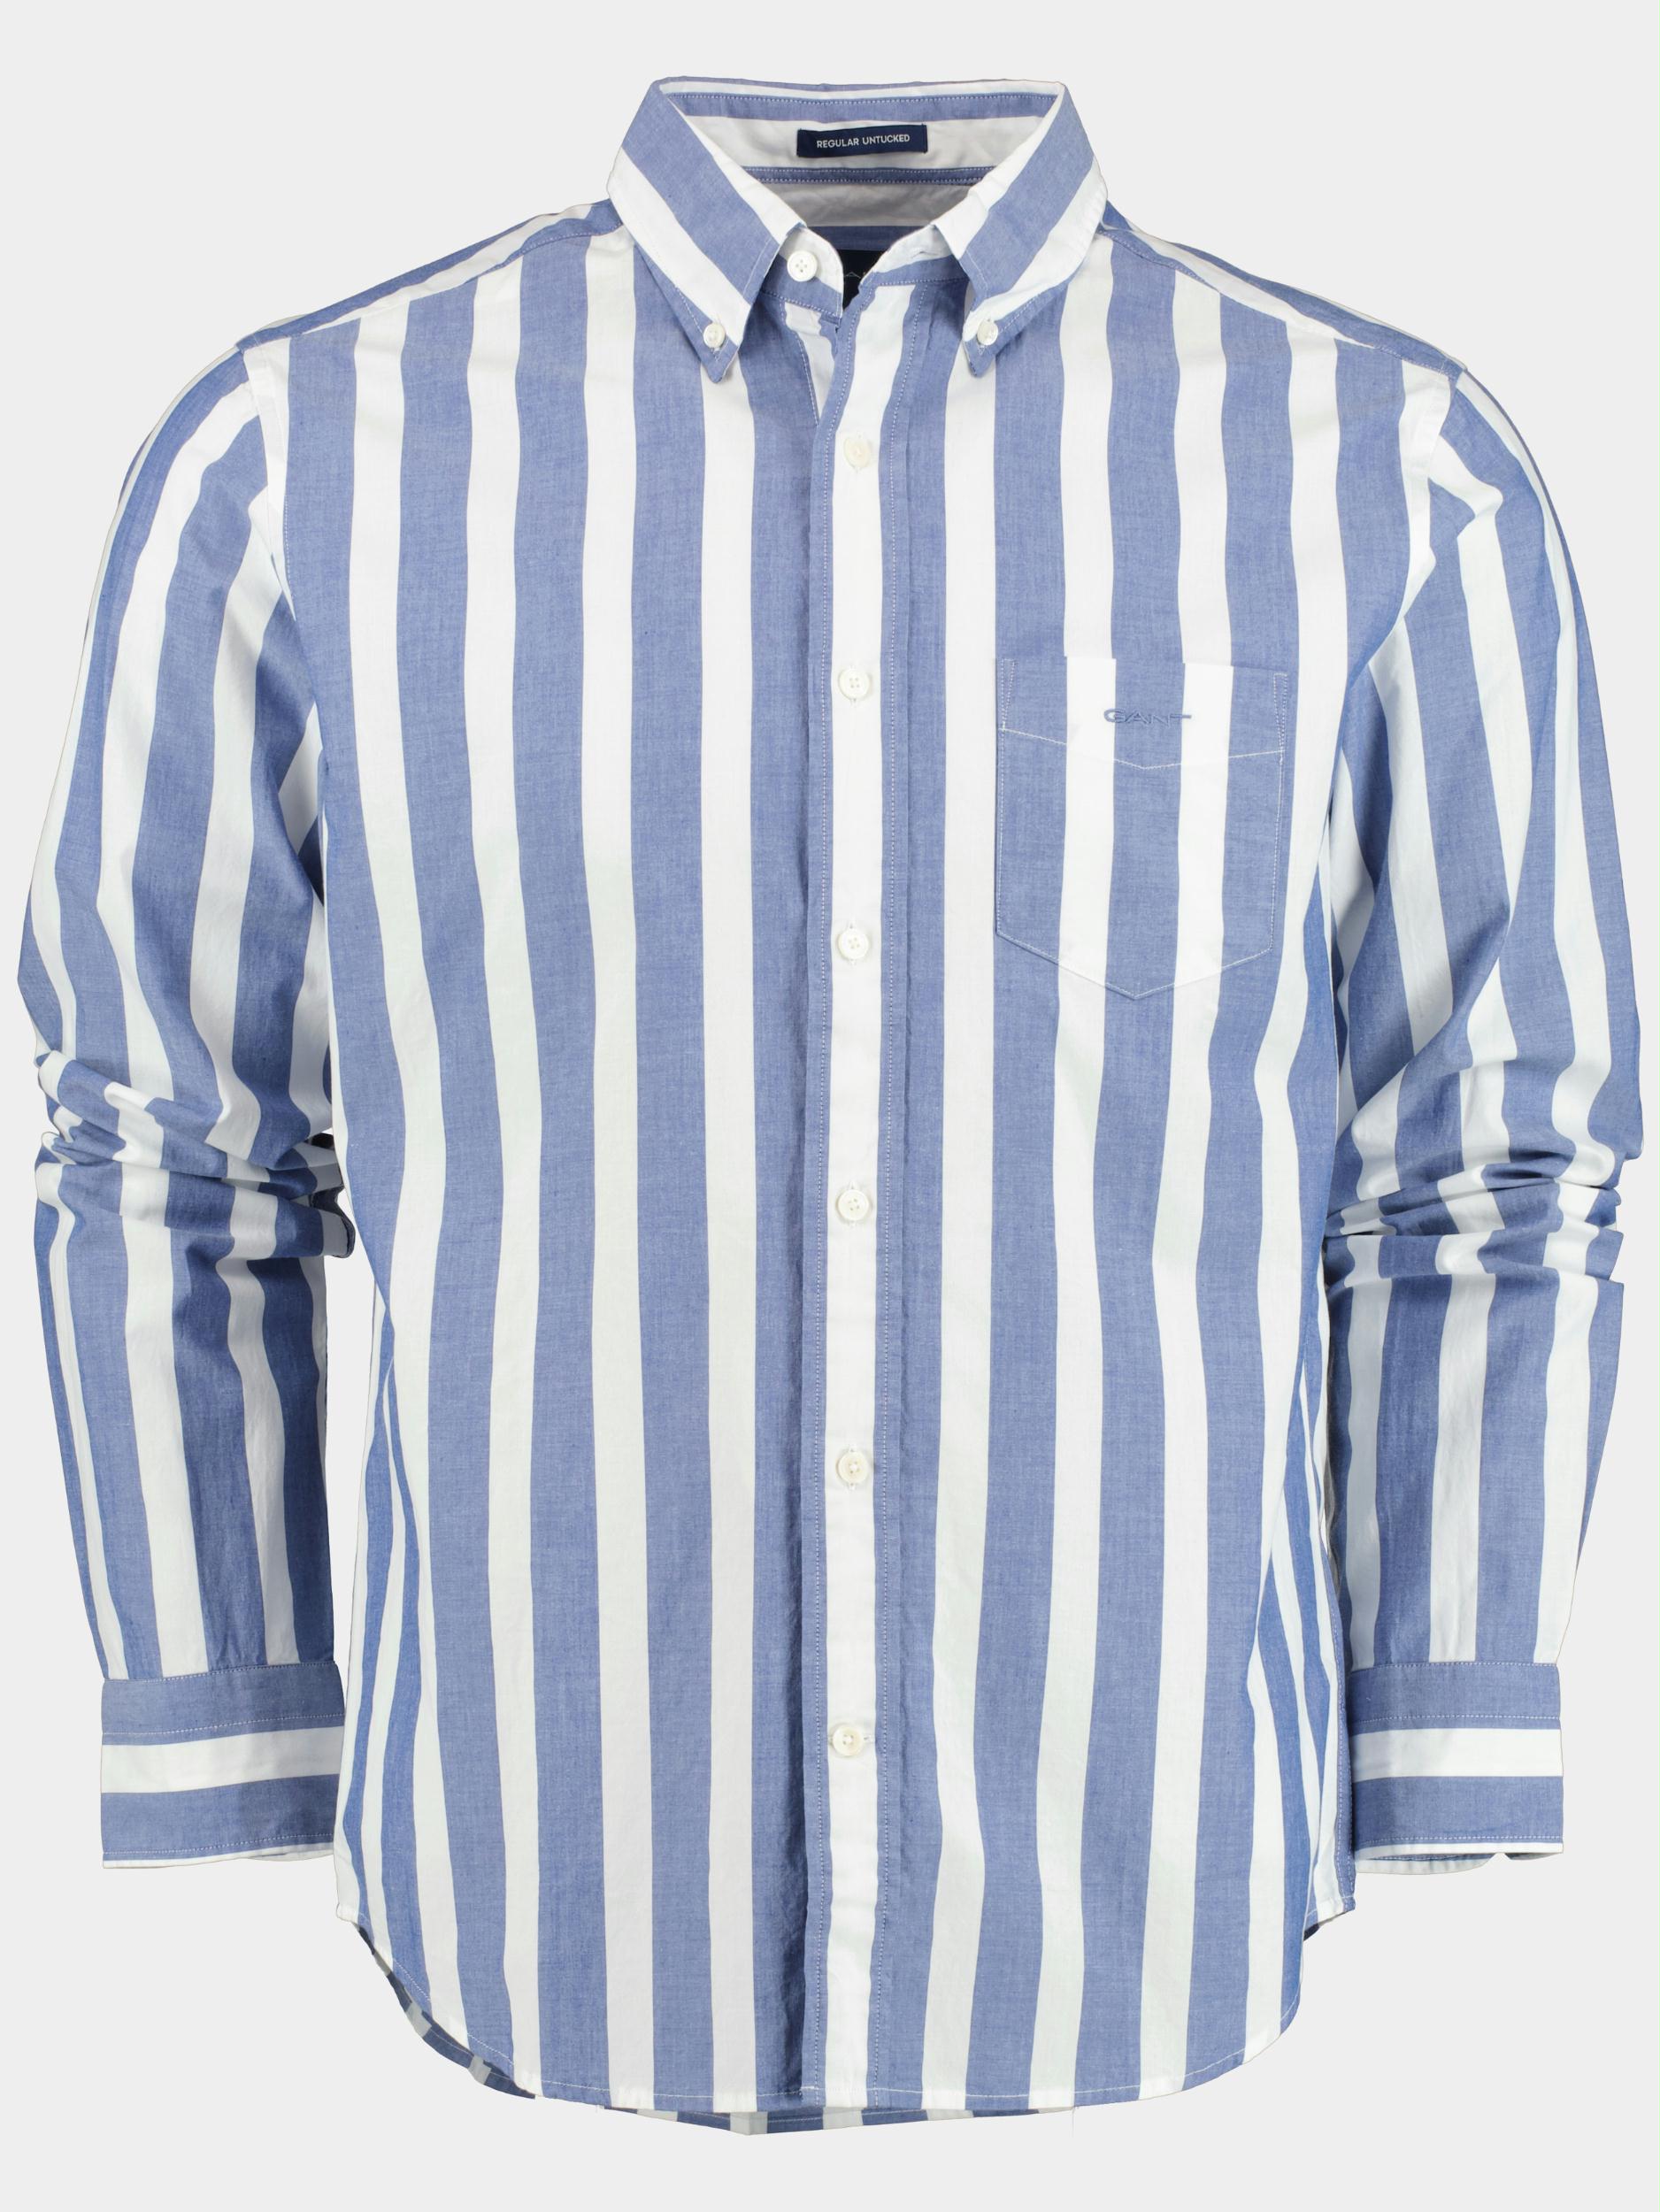 Gang struik kruis 30% Korting Gant Casual Hemd Lange Mouw Blauw Reg UT Wide Broadscloth  Stripe 3230112/436 | Bos Men Shop